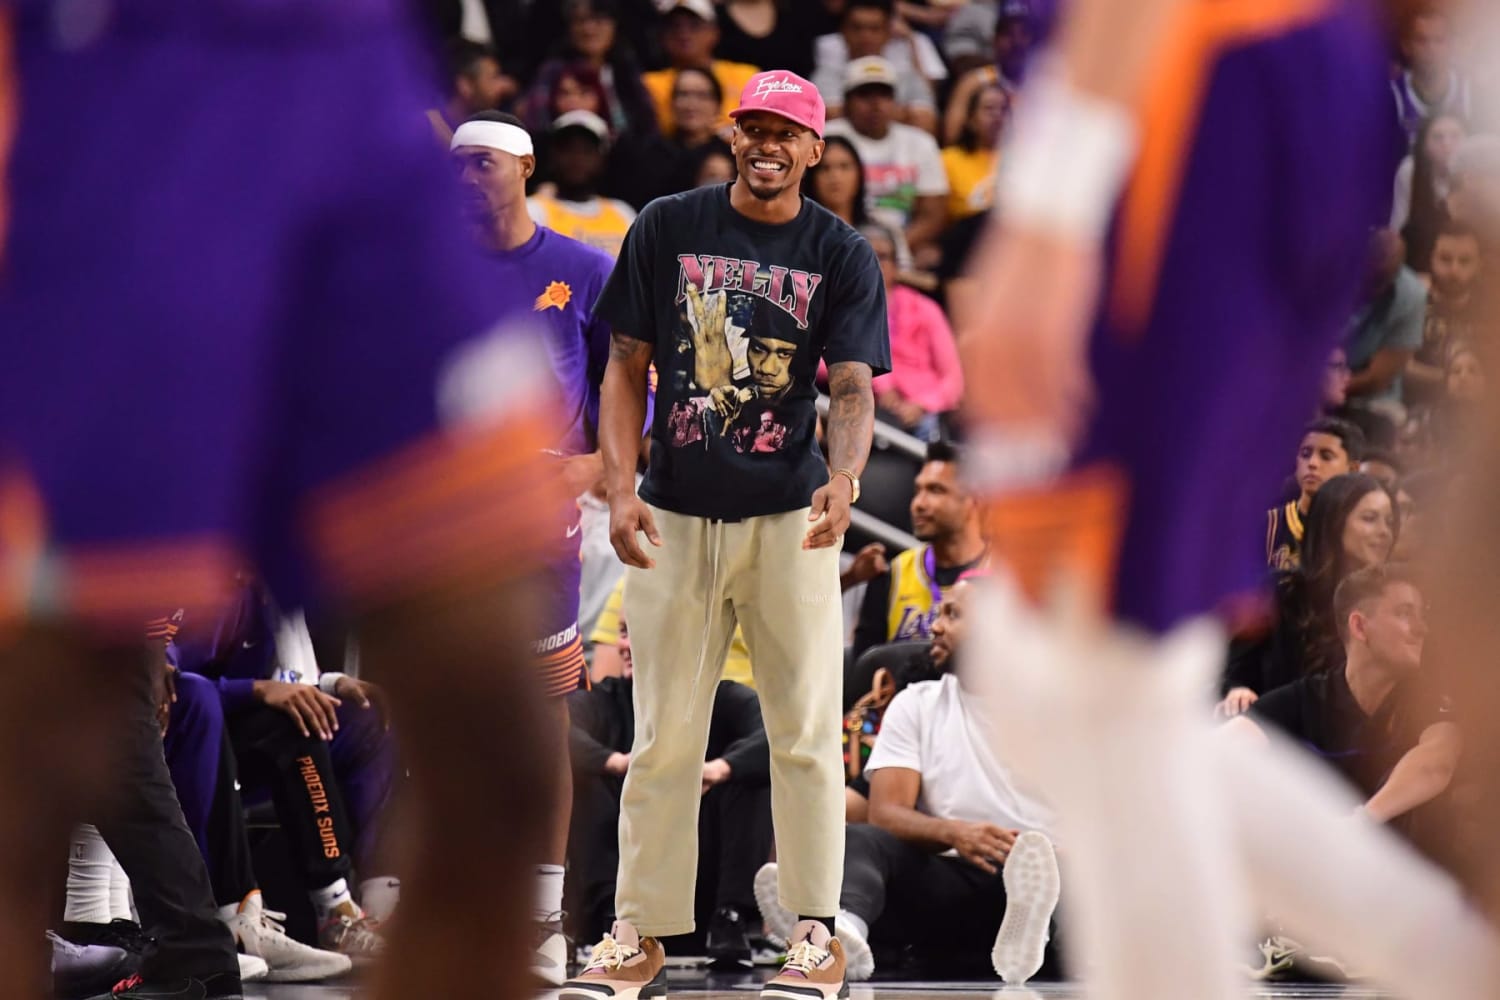 Suns 'Fun Facts': Biyombo driven by Afrobeat music, African NBA